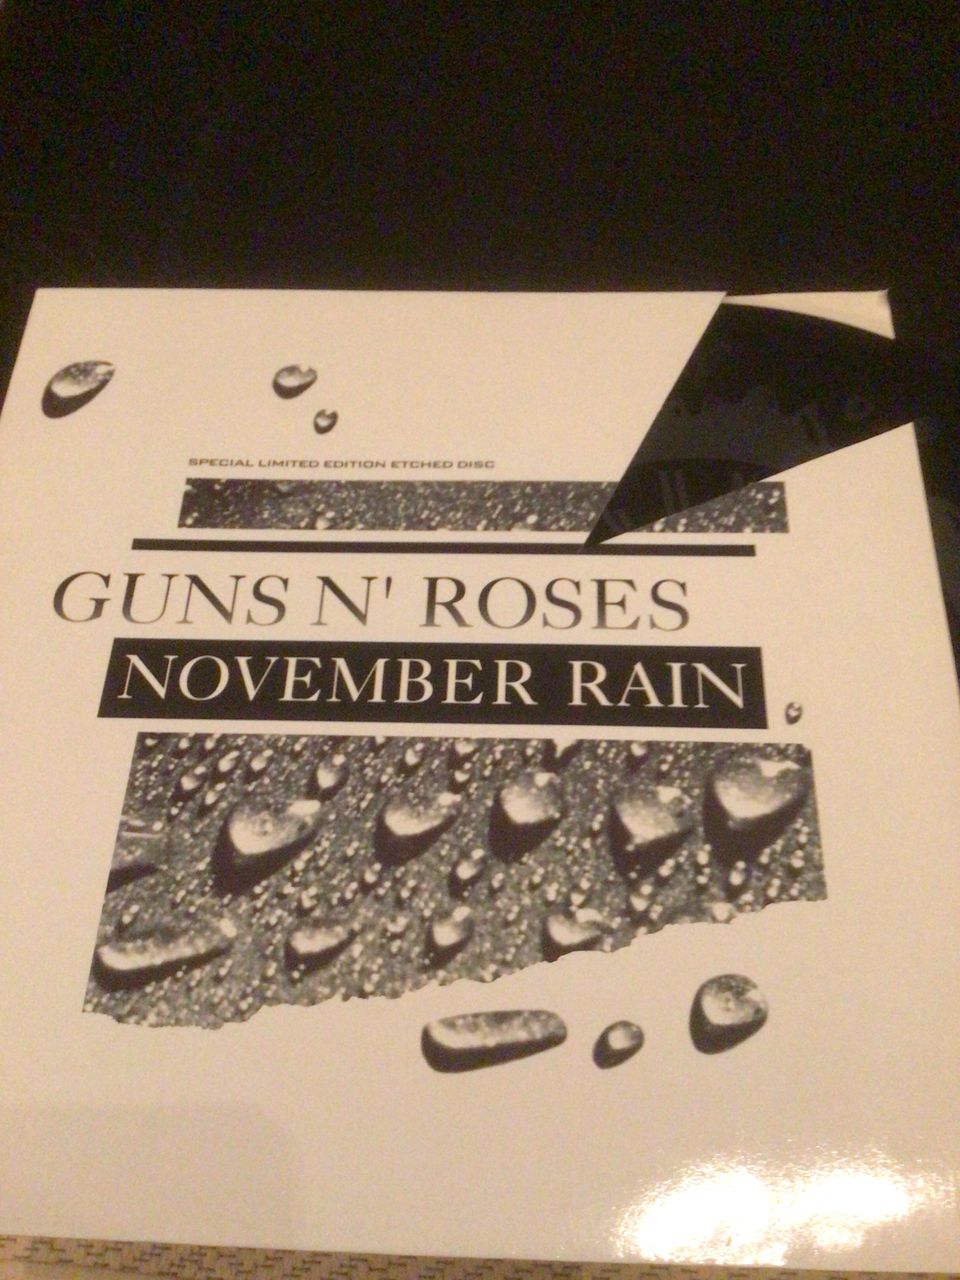 Guns n’ roses-November rain special limited edition.